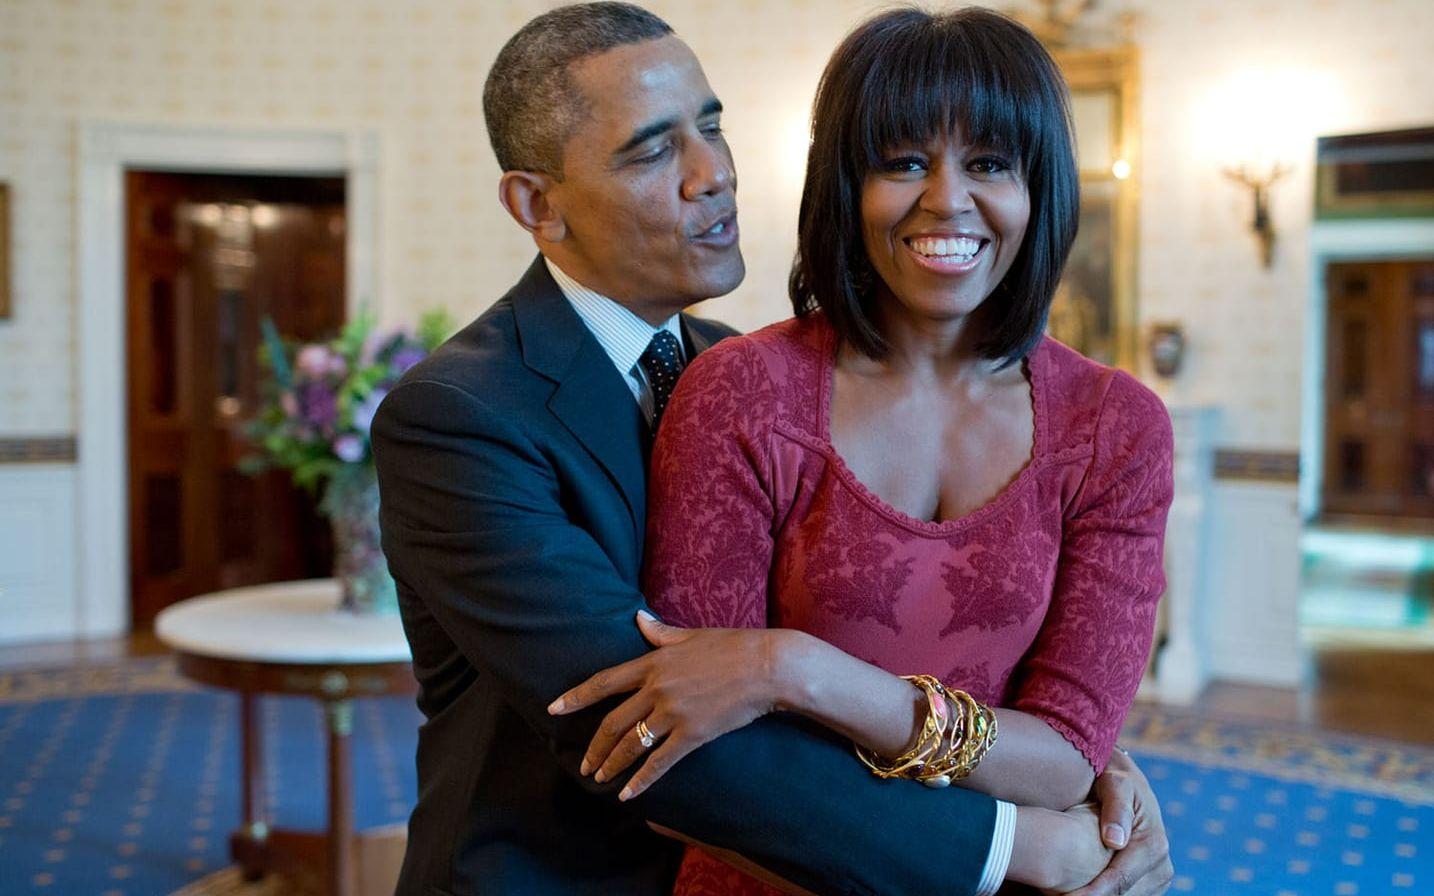 17 januari, 2013: Presidenten sjunger "Ja må hon leva" för Michelle Obama. Foto: Pete Souza / Vita Huset